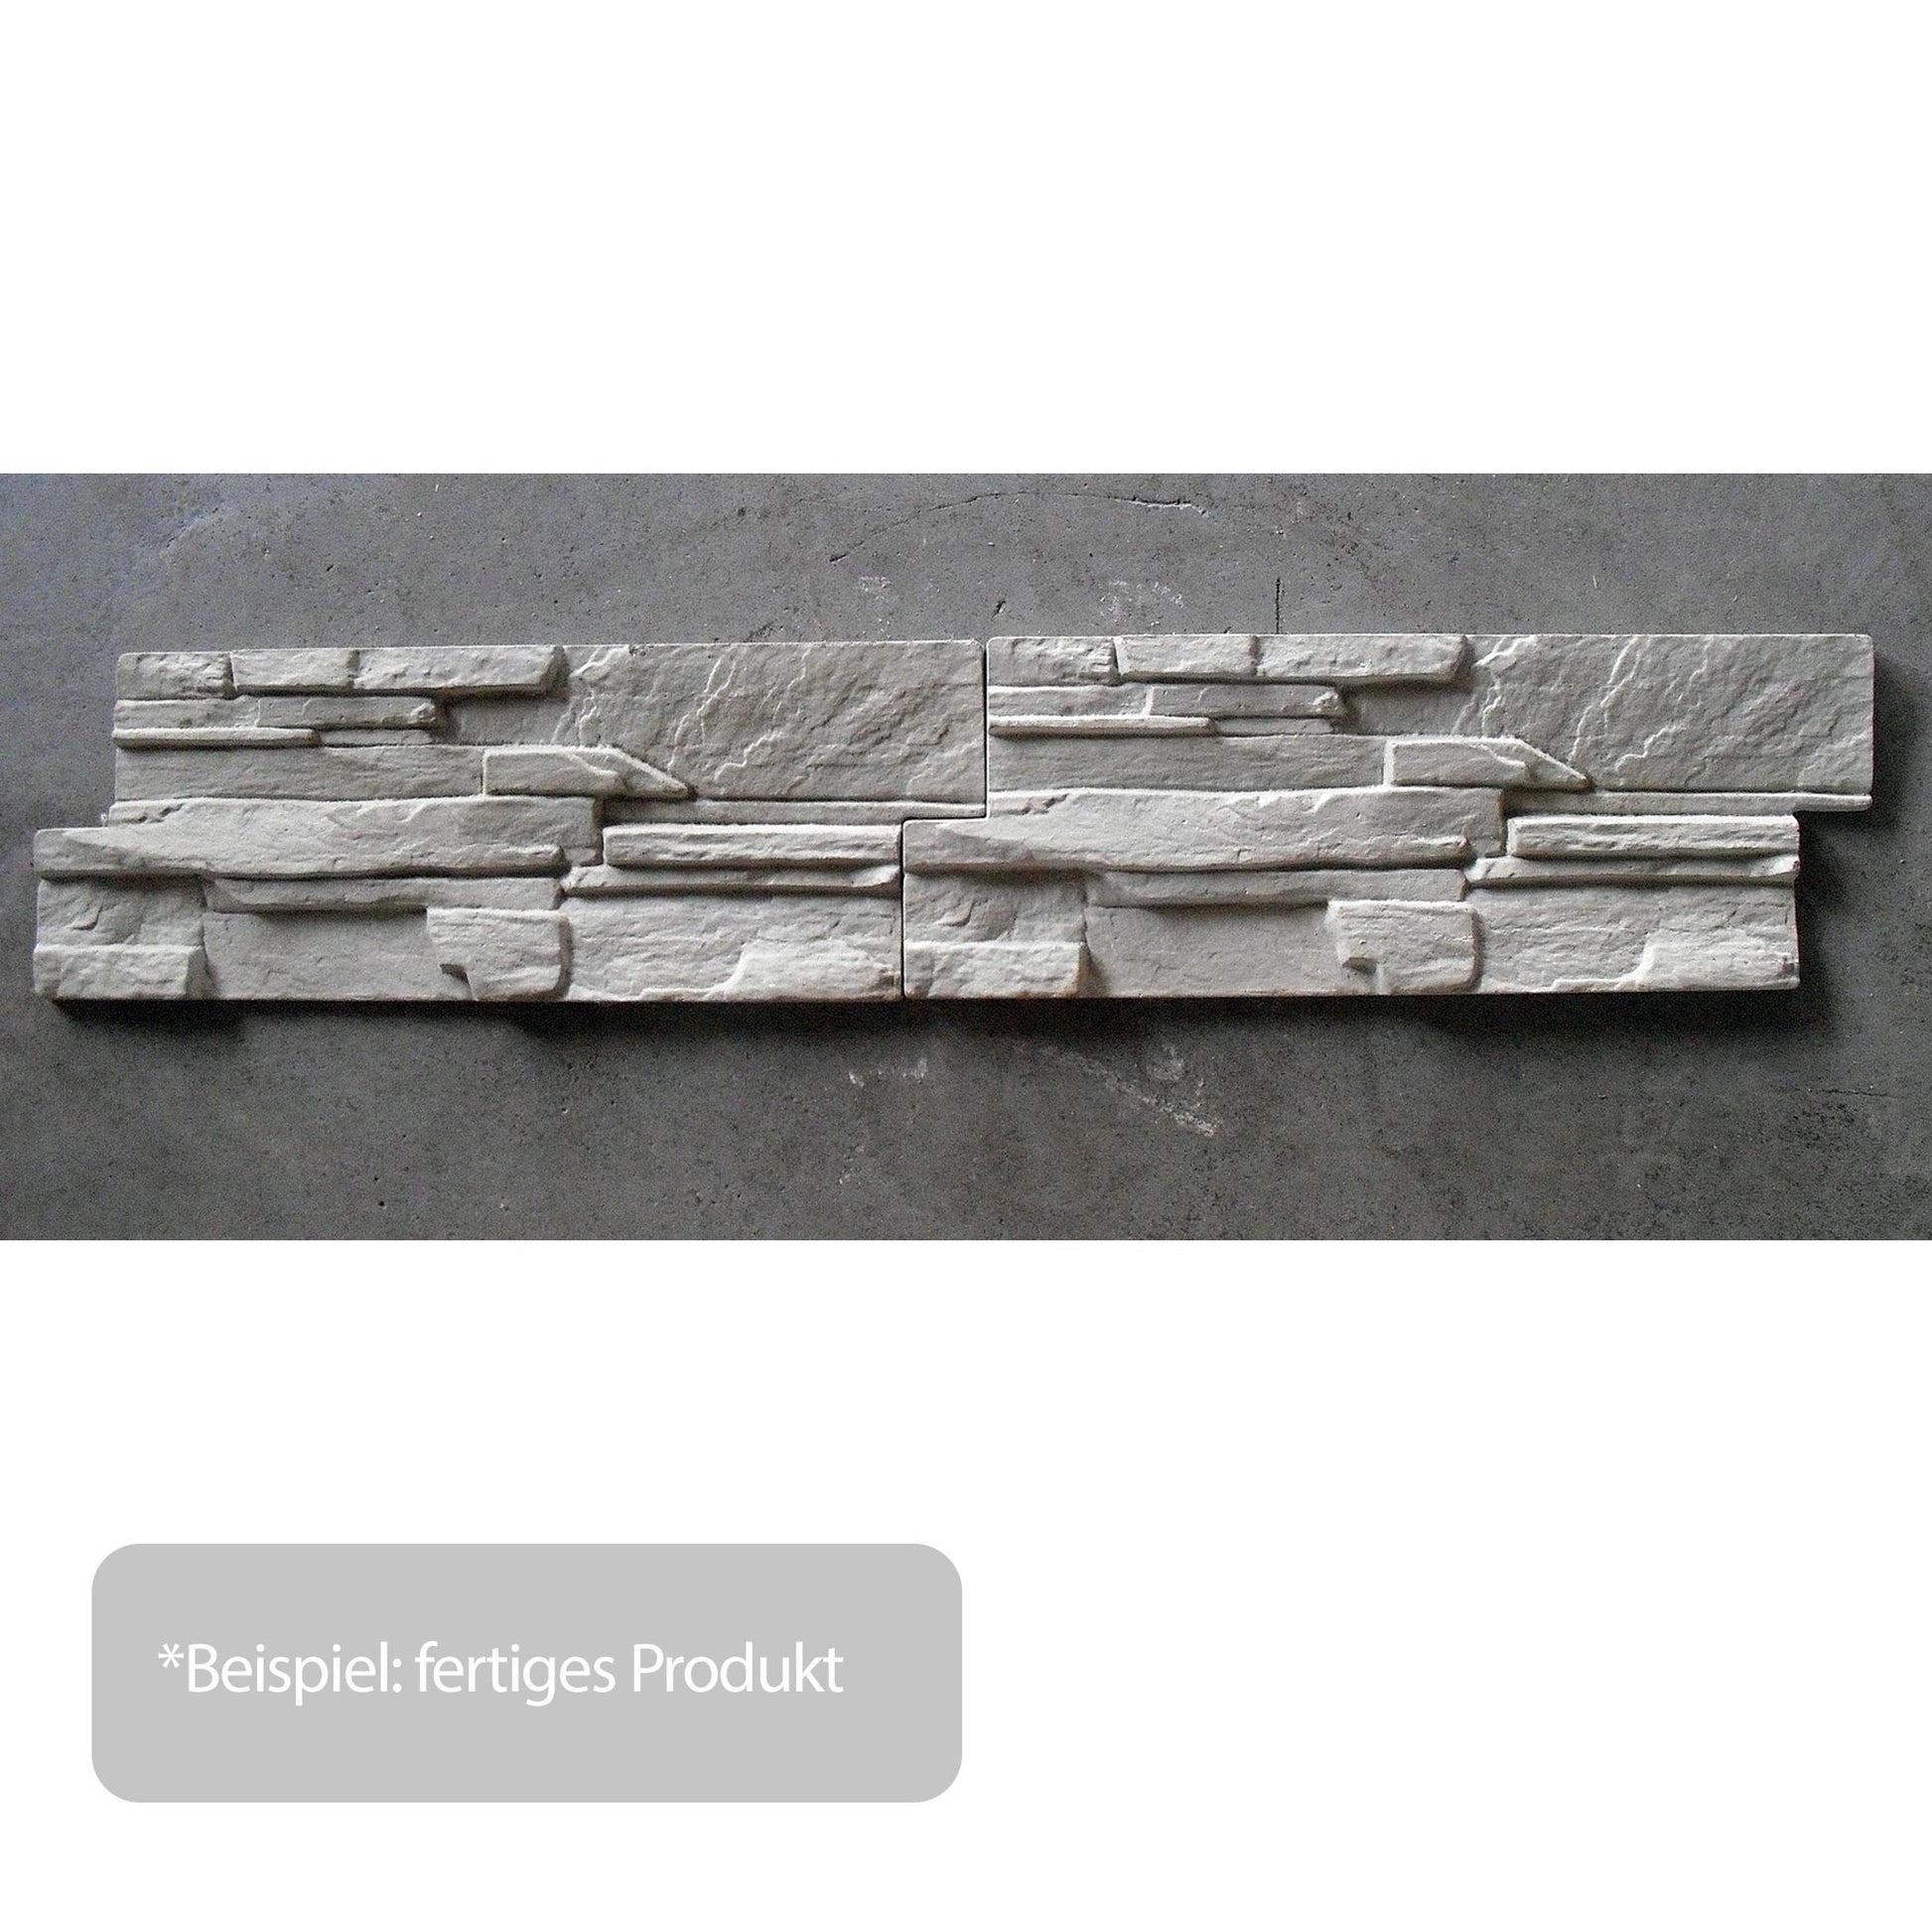 Schalungsformenset für Wandklinker 50x19cm - Fertigprodukt